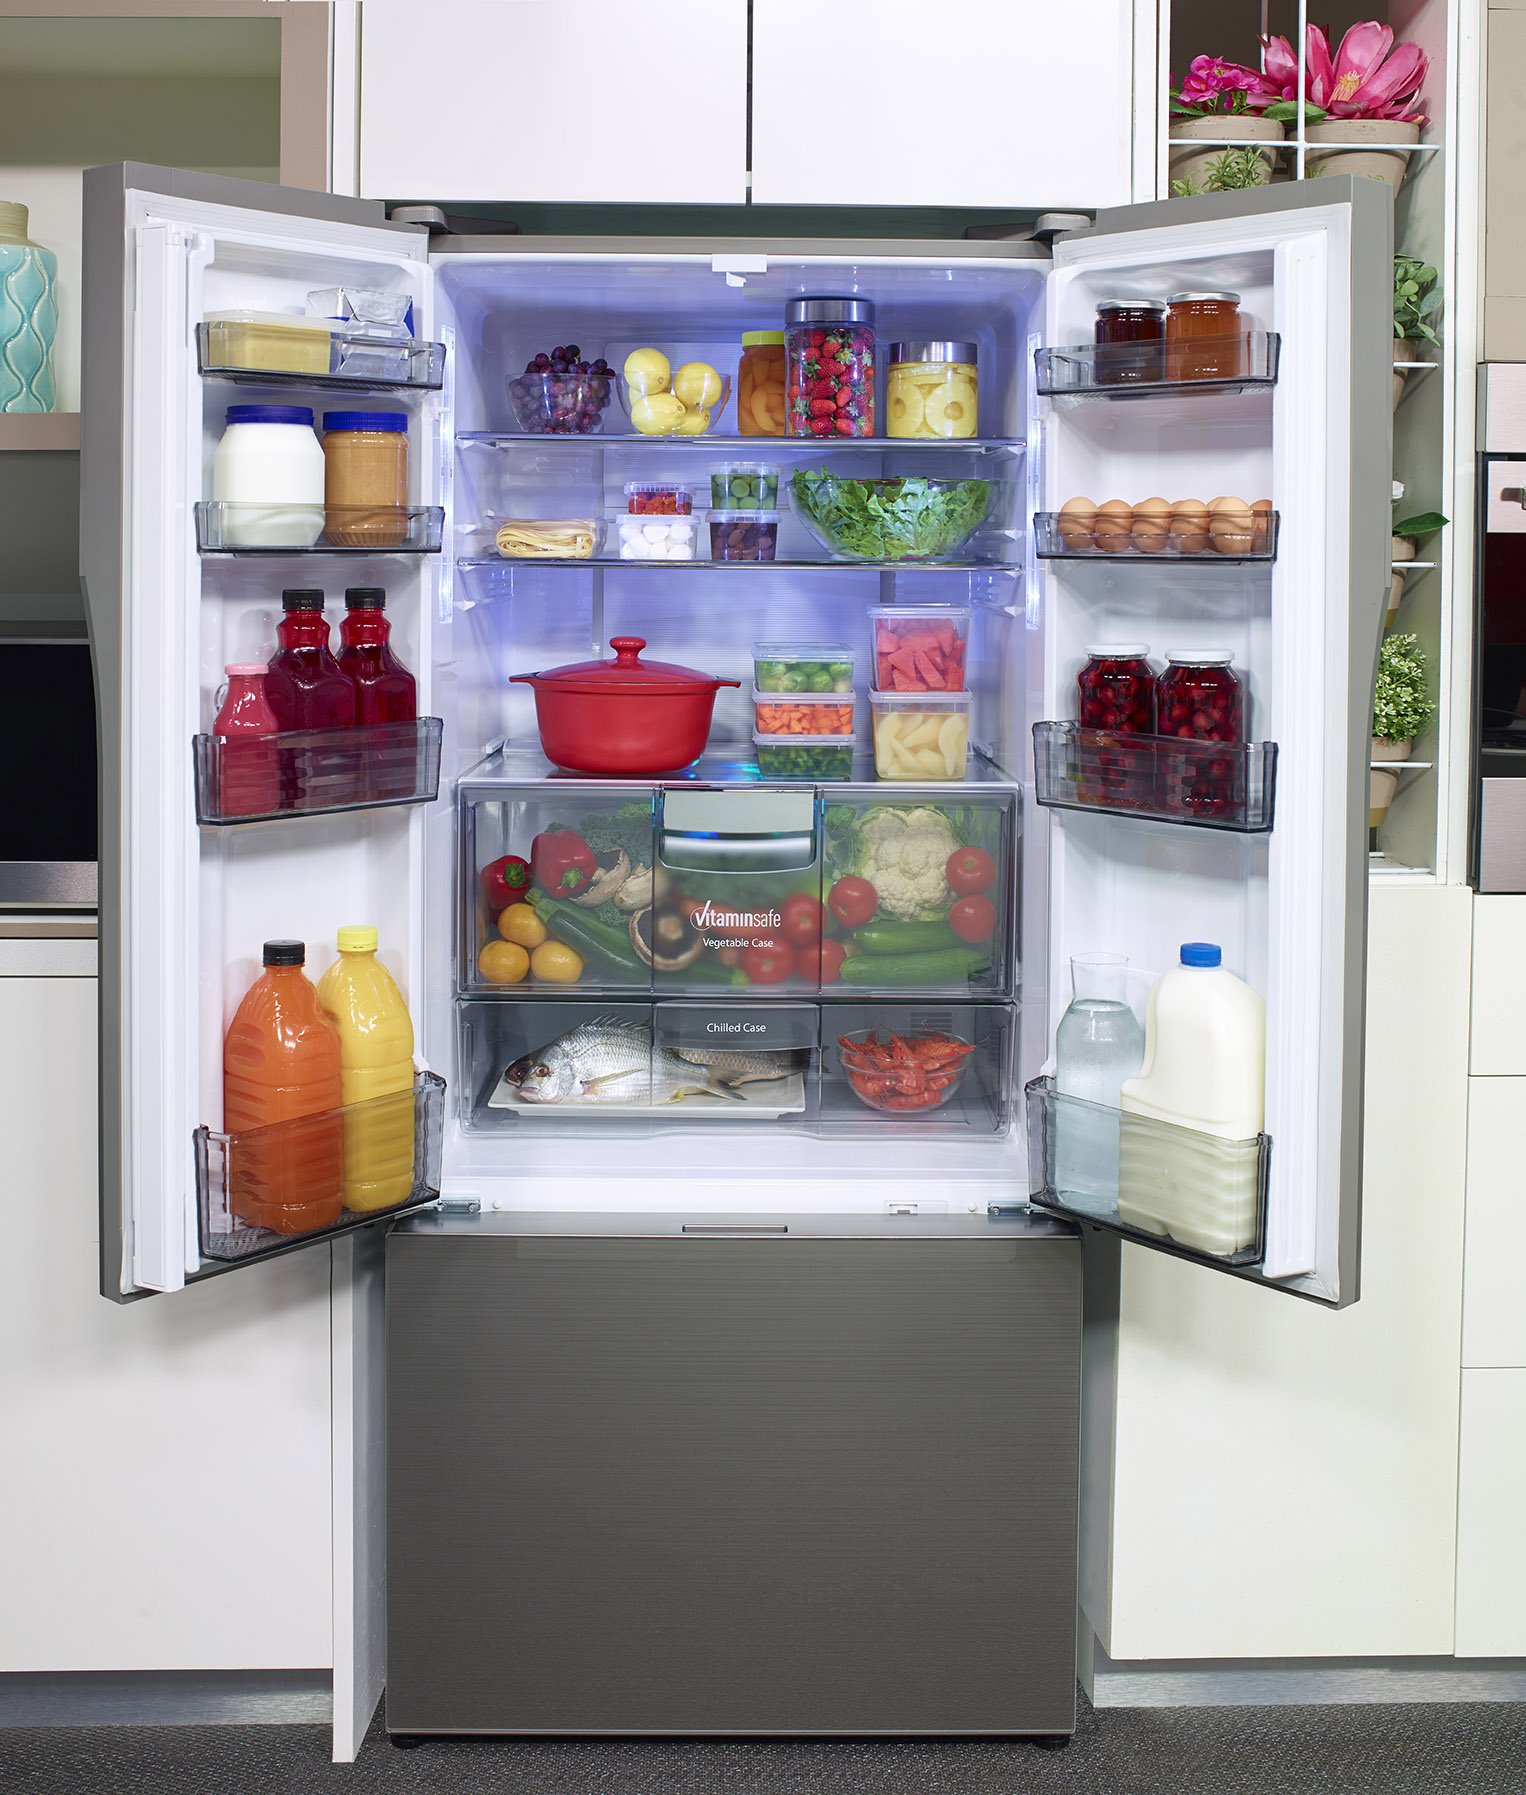 Panasonic Introduces New Premium Refrigerator Range channelnews